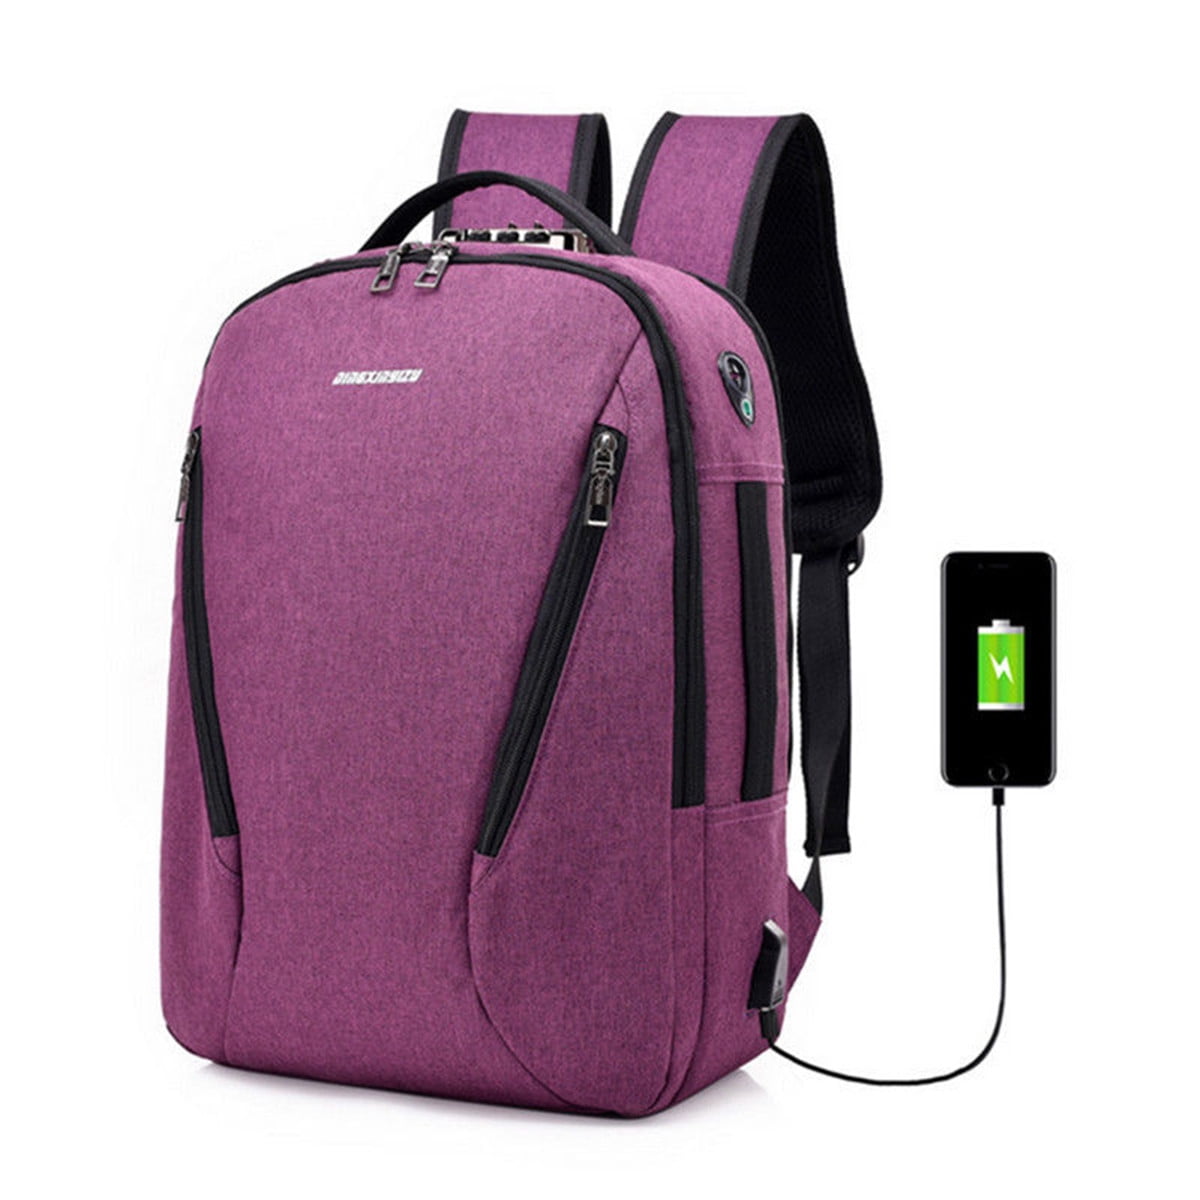 Boys Laptop Backpack School, Mens Canvas Shoulder Travel Bags Rucksack ...